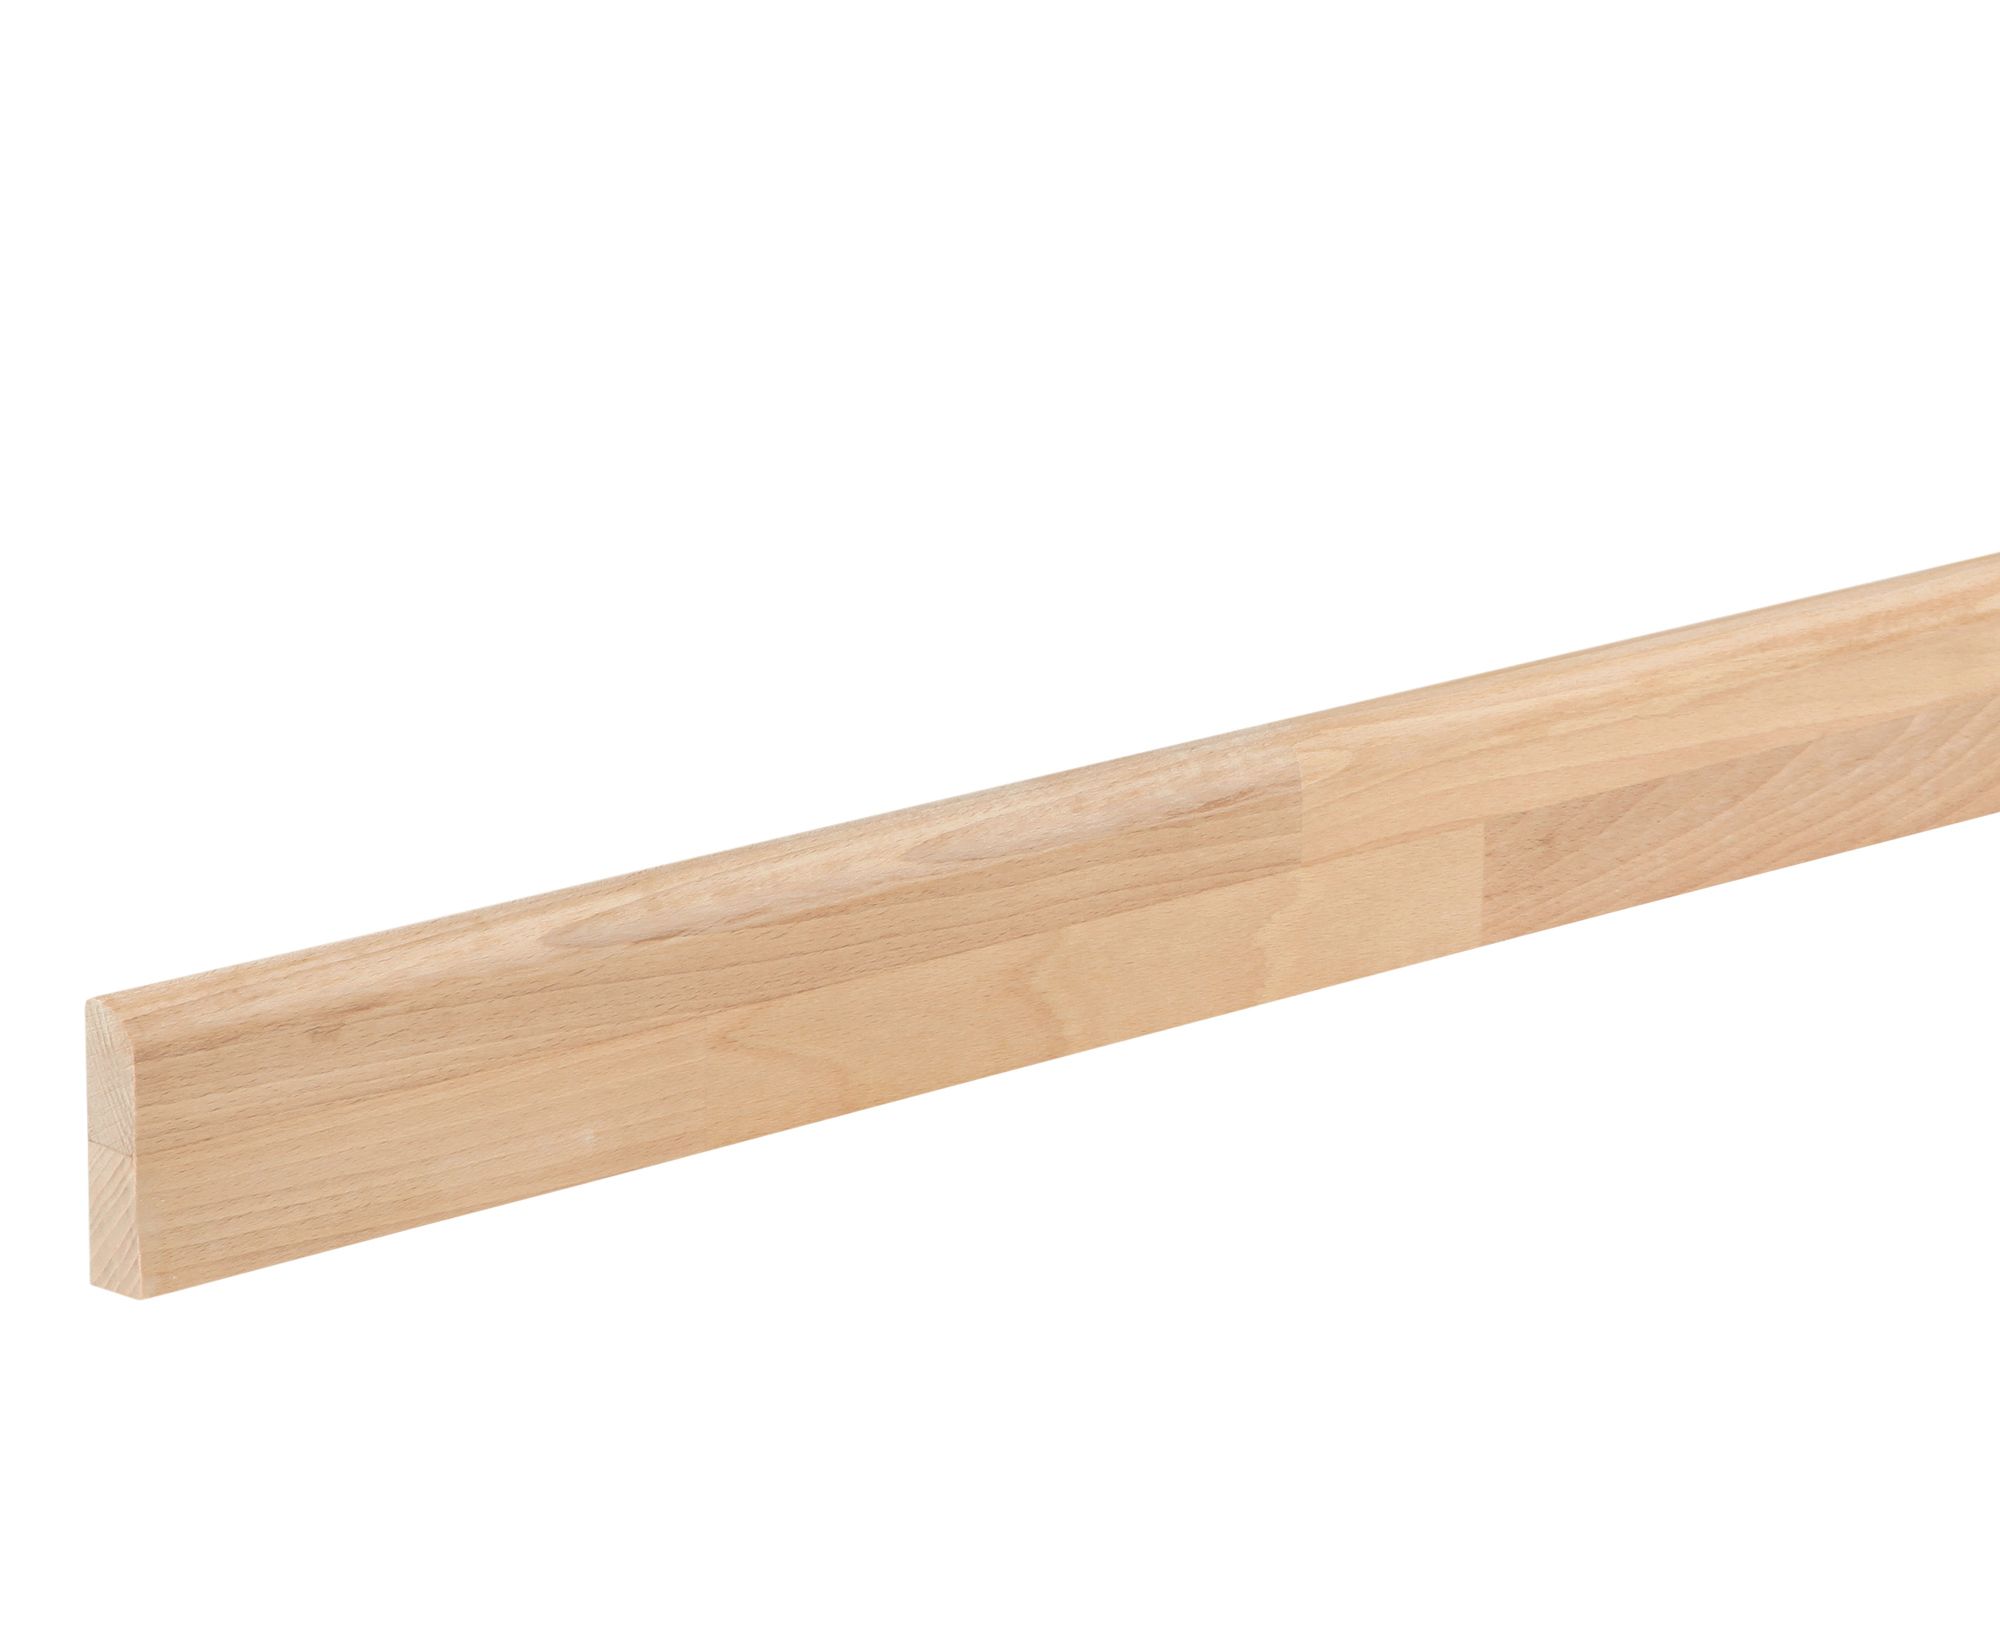 Wickes Solid Wood Worktop Upstand - Solid Beech 70 x 18mm x 3m